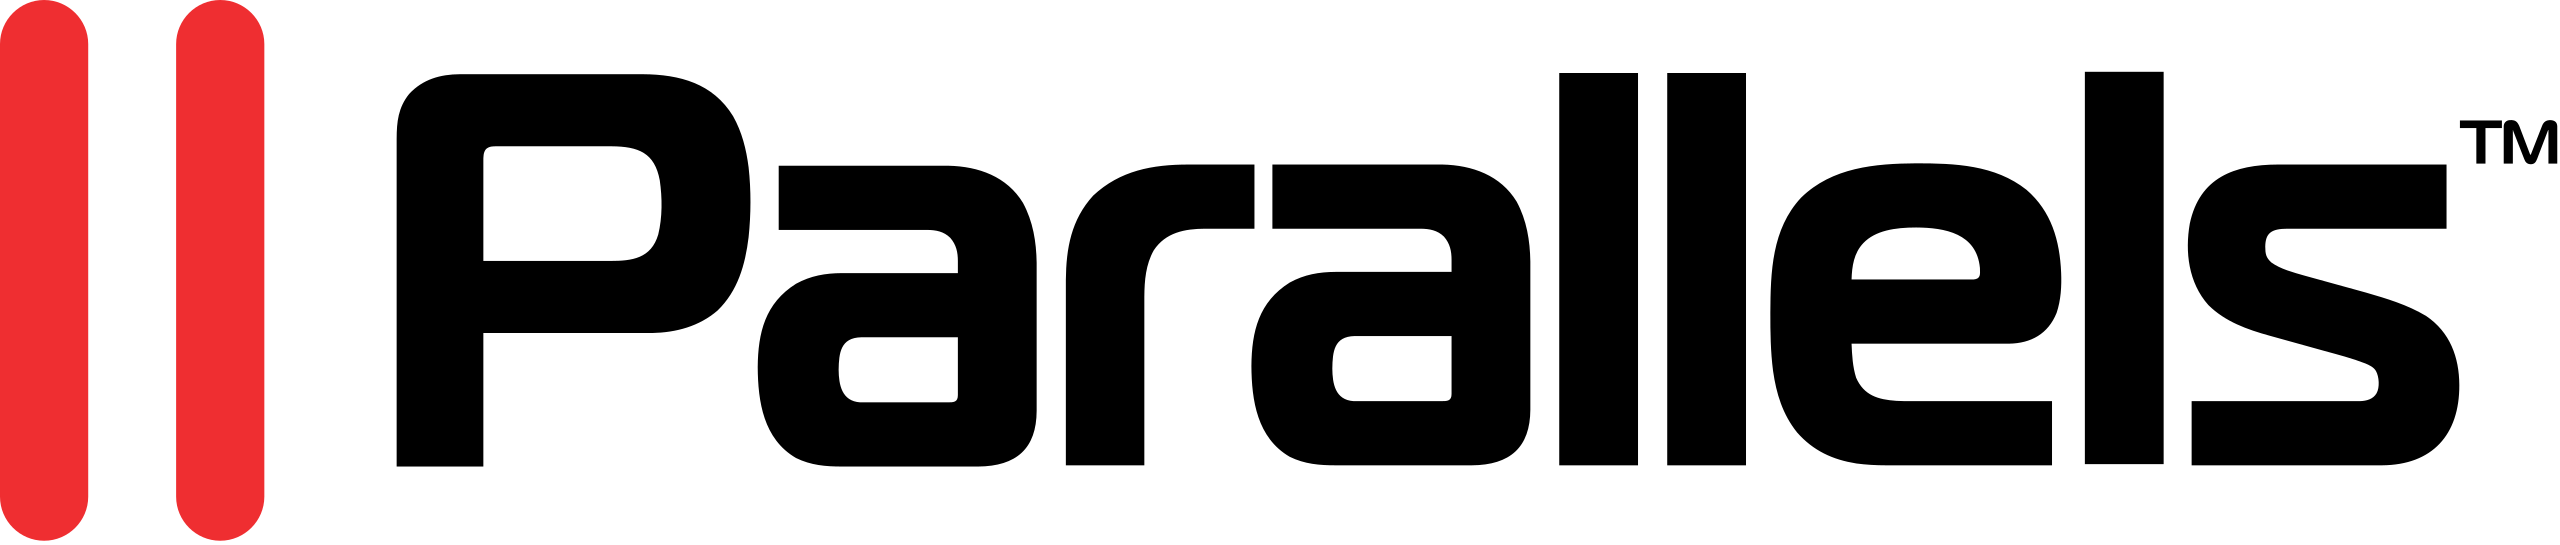 2560px-Parallels_logo.svg